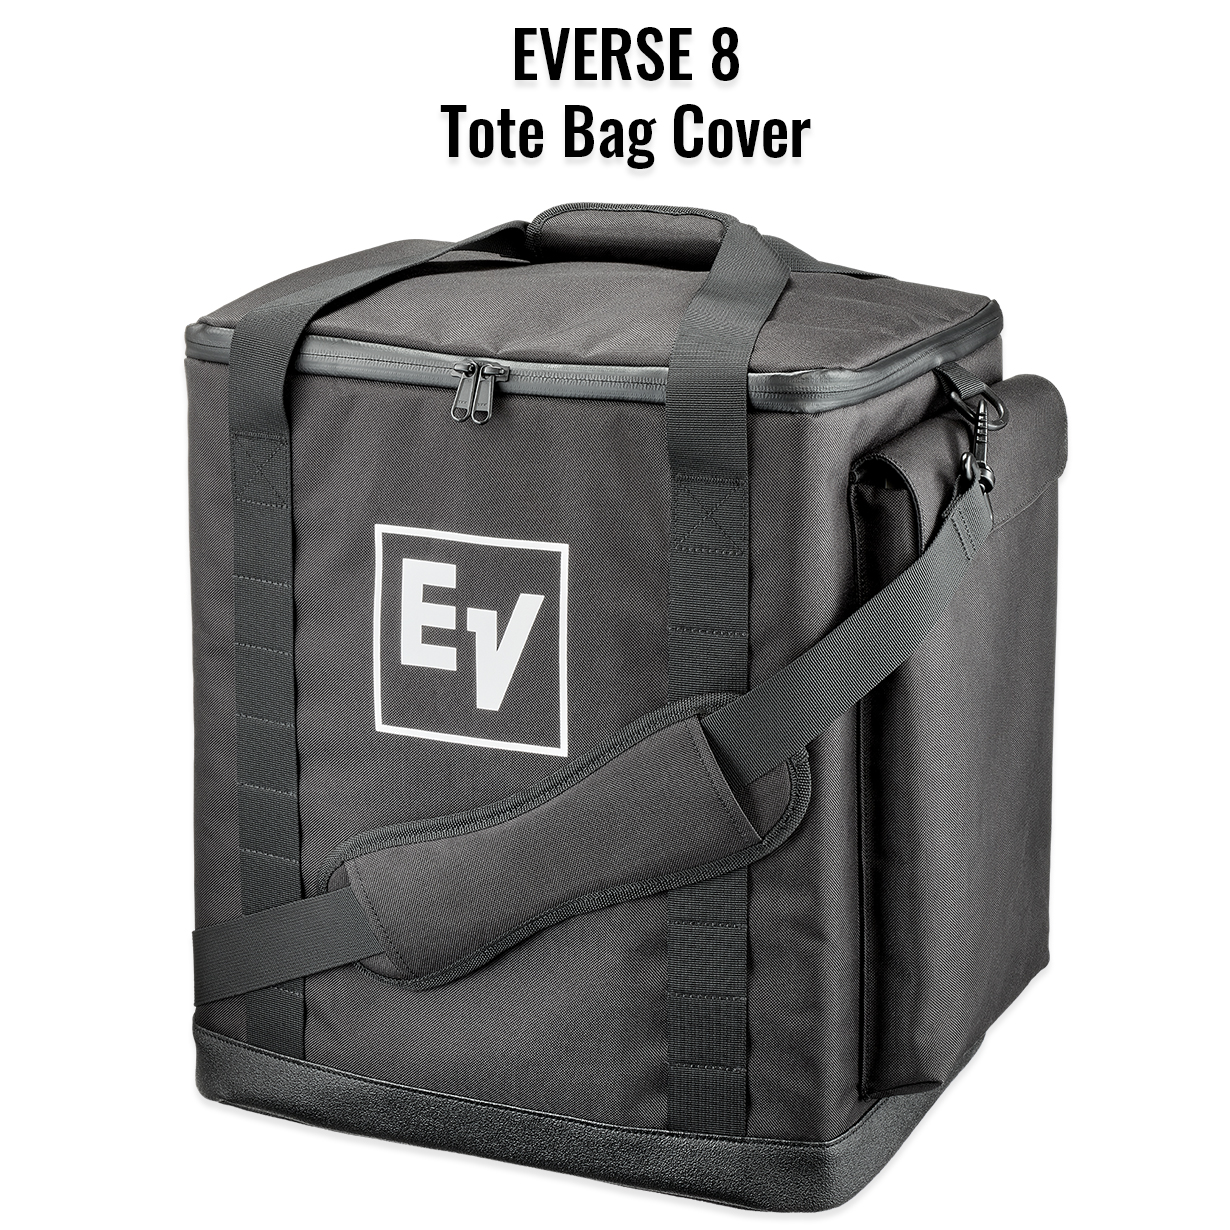 Everse 8 Tote Bag